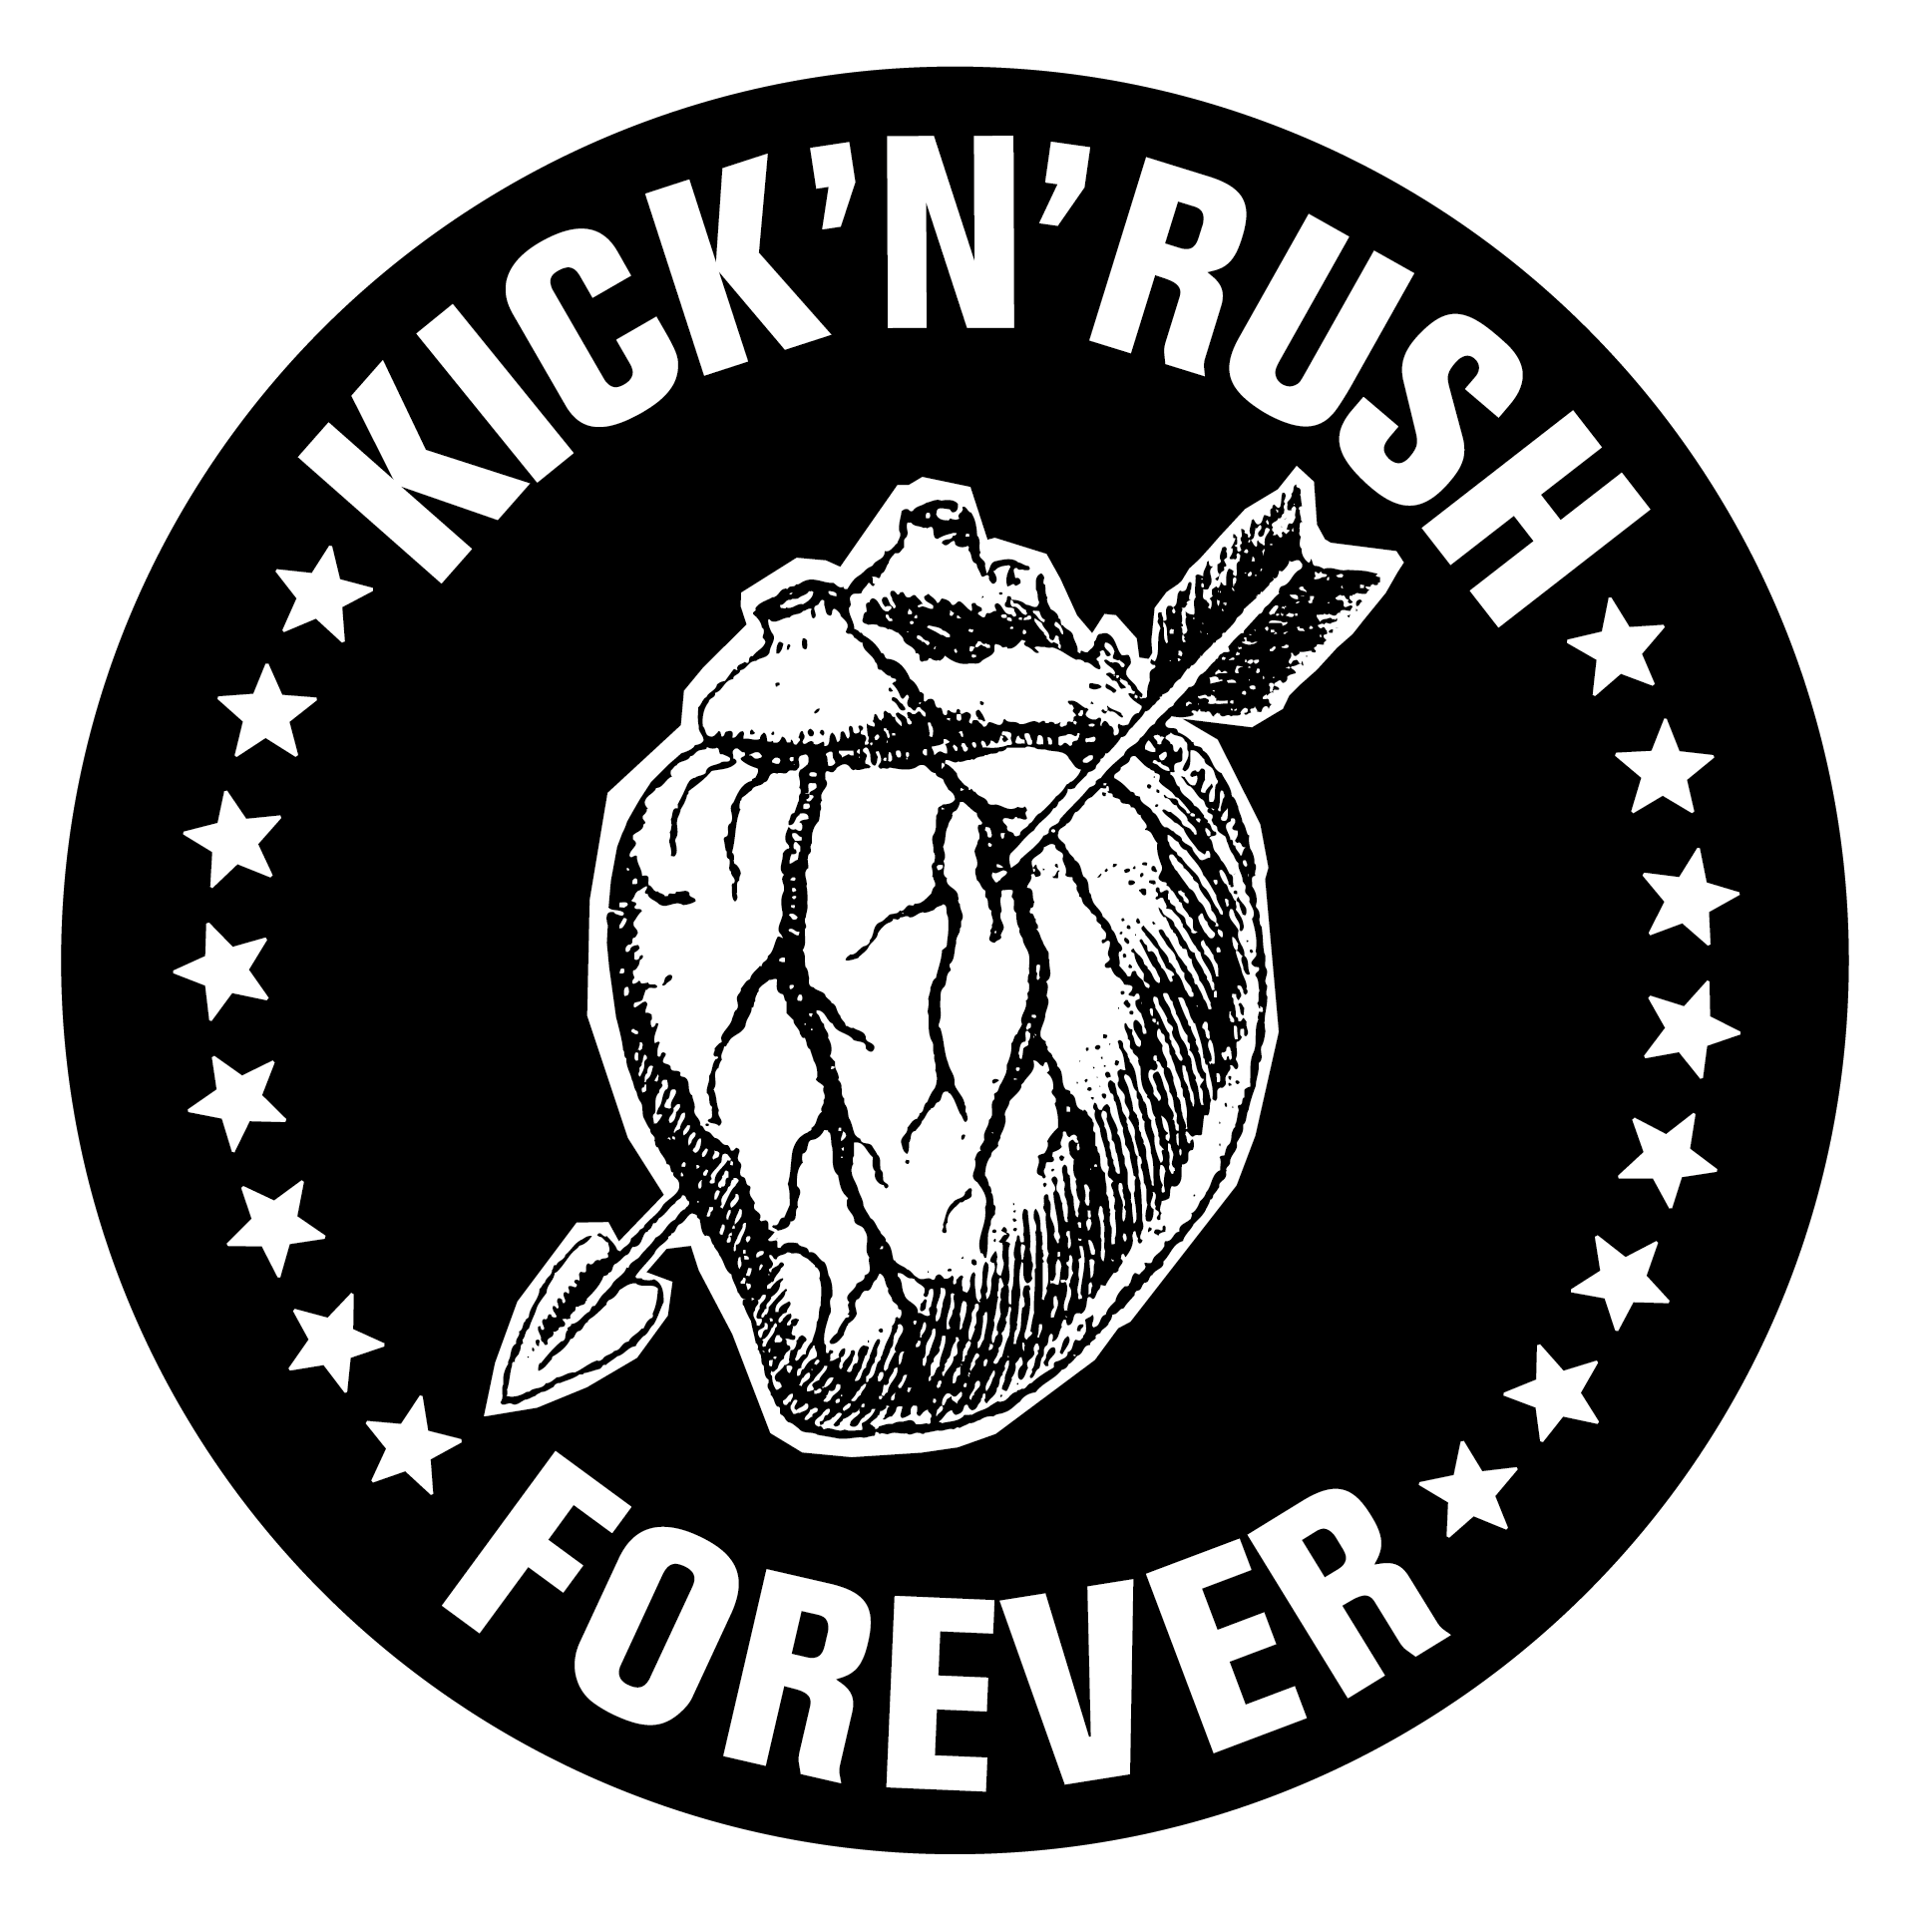 (c) Kick-n-rush.ch